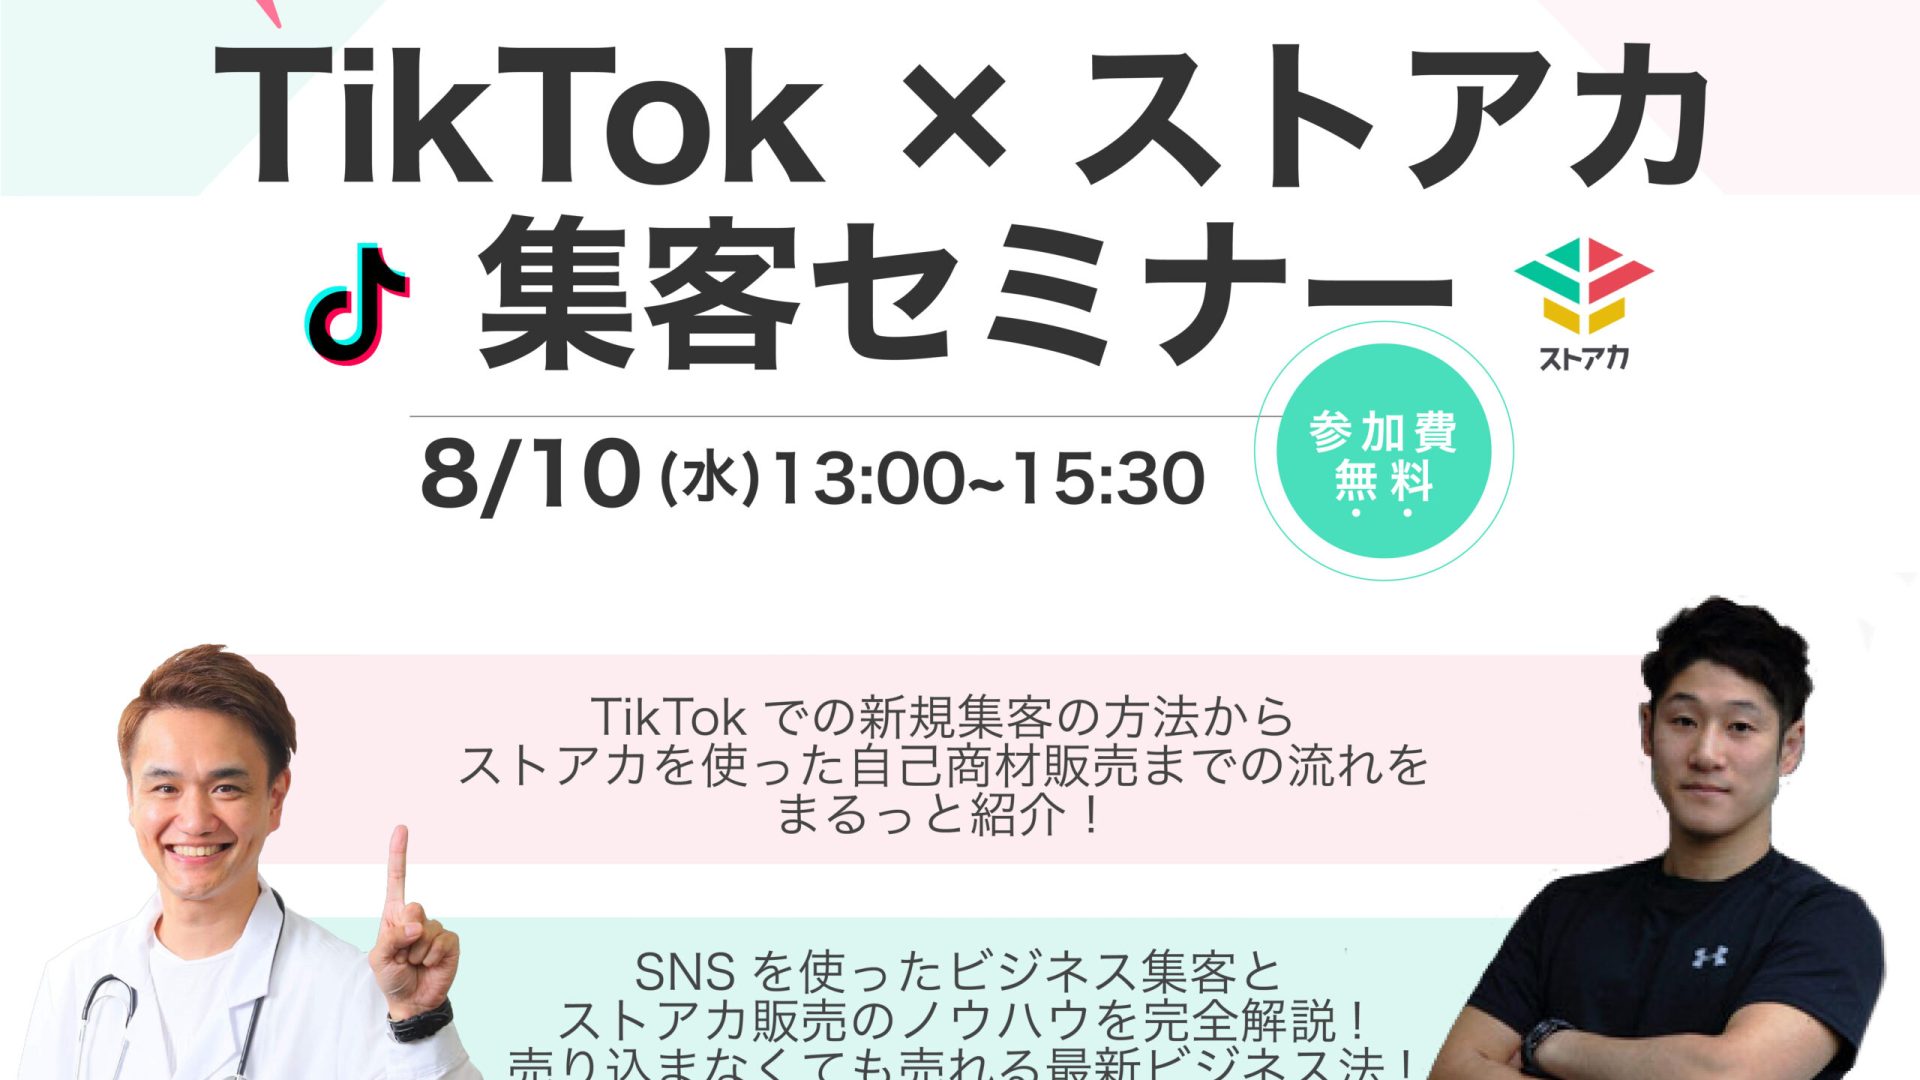 TikTok×ストアカ 集客セミナー 01 アートボード 1 コピー 3